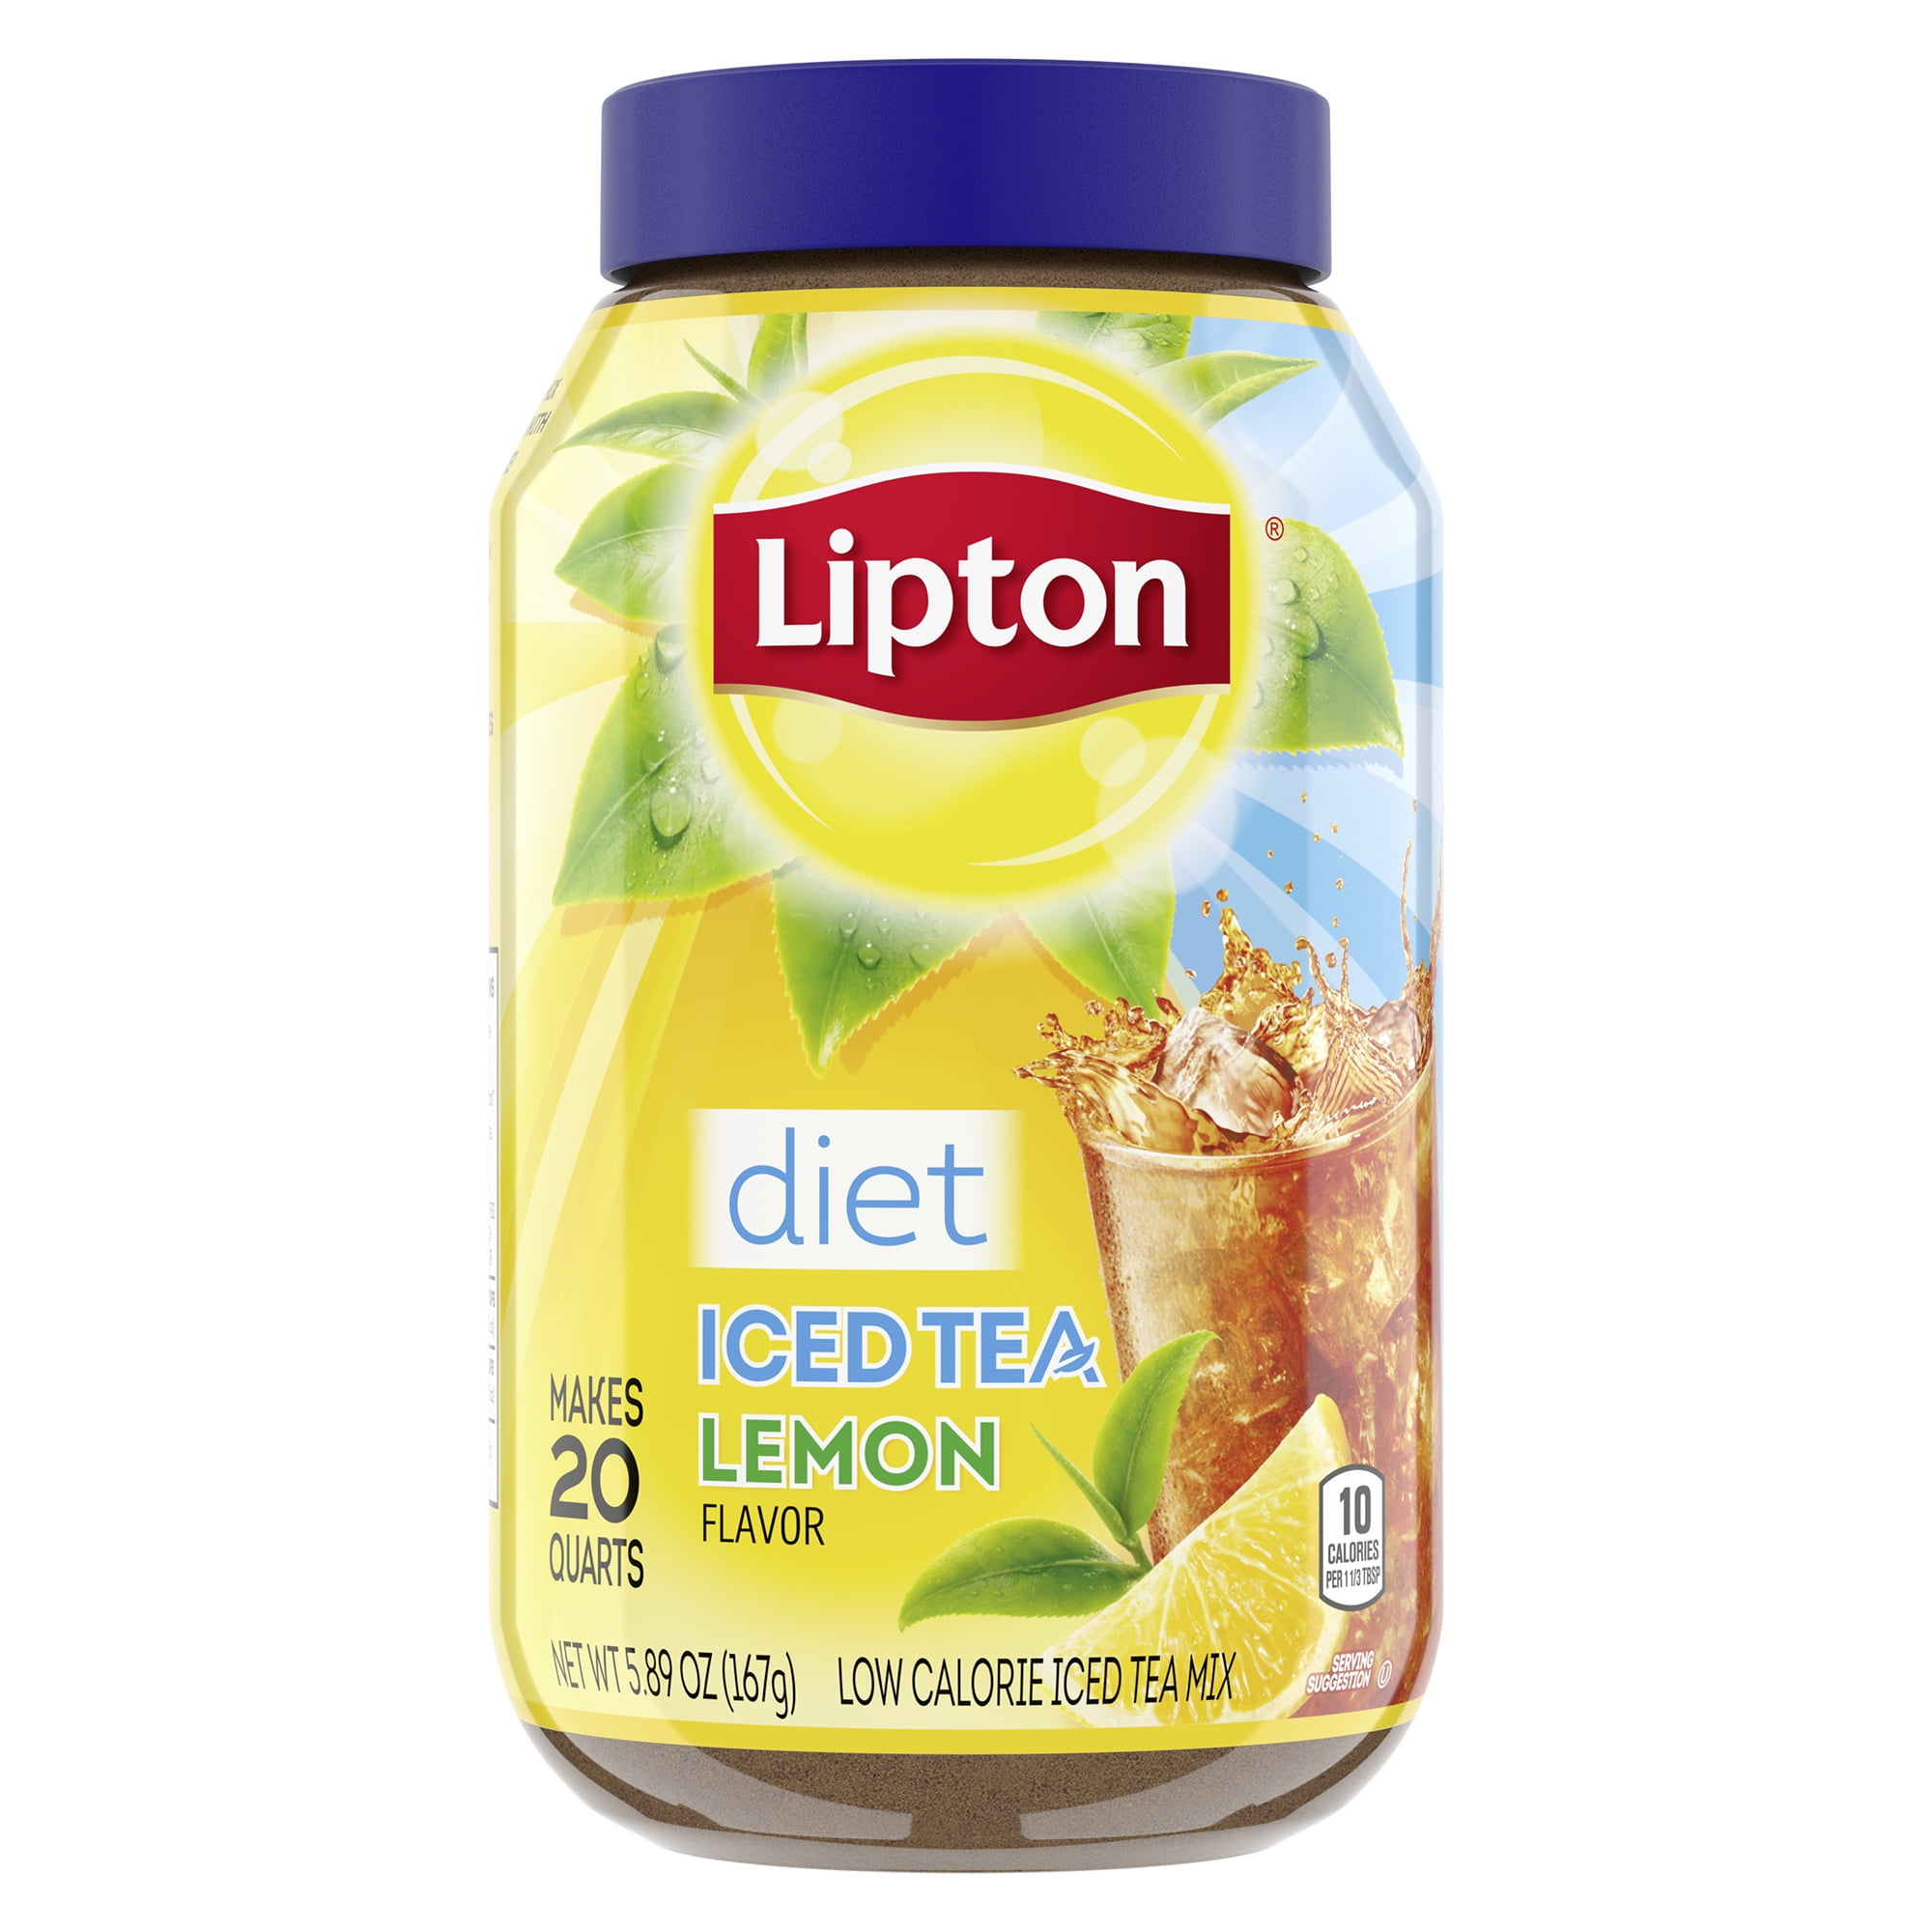 Lipton Diet Iced Black Tea, Lemon, Caffeinated Sugar-Free, 20 Quarts